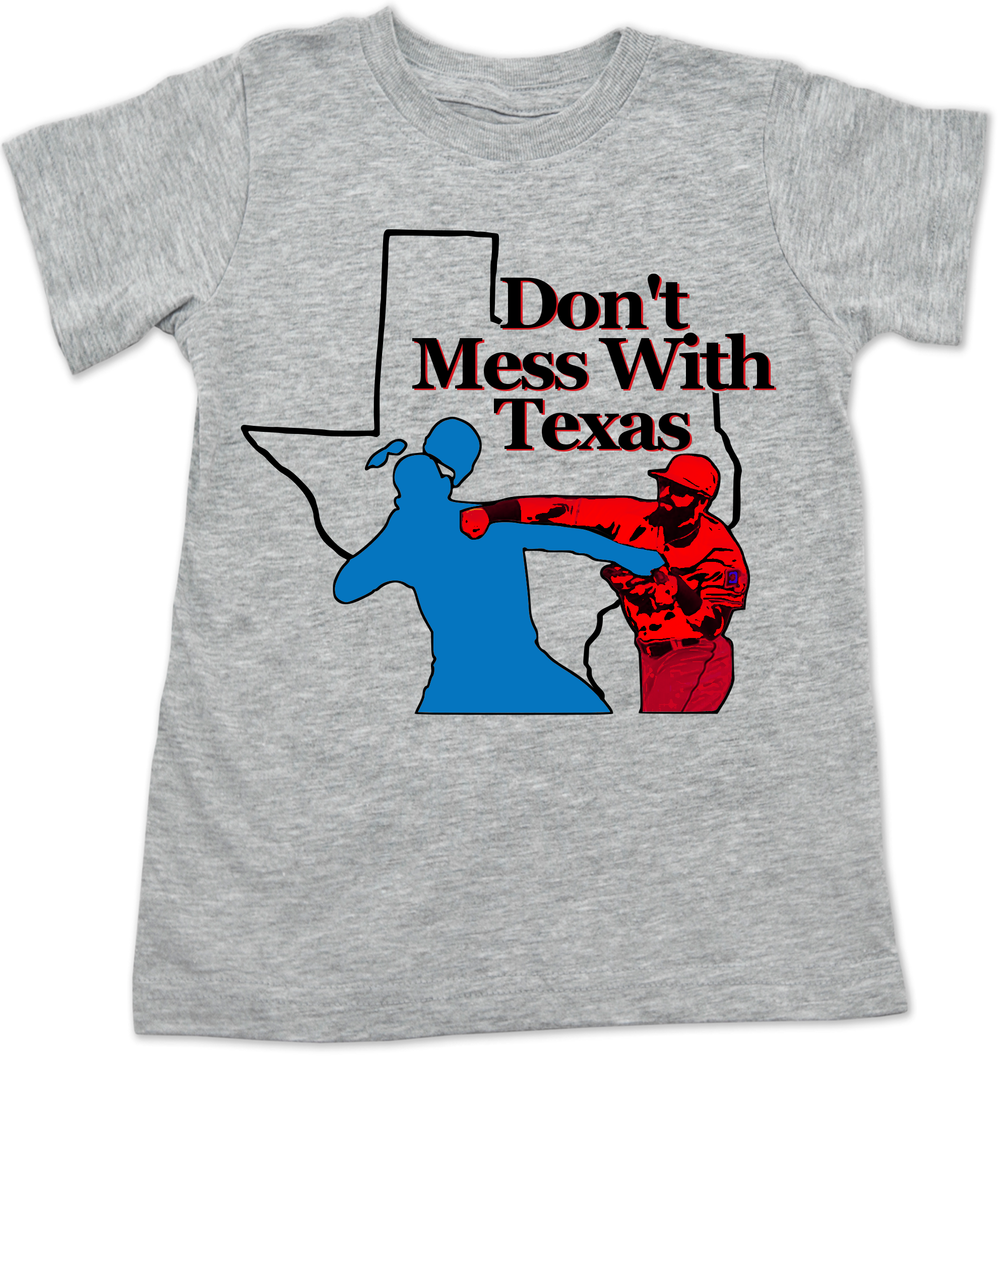 texas rangers shirts odor